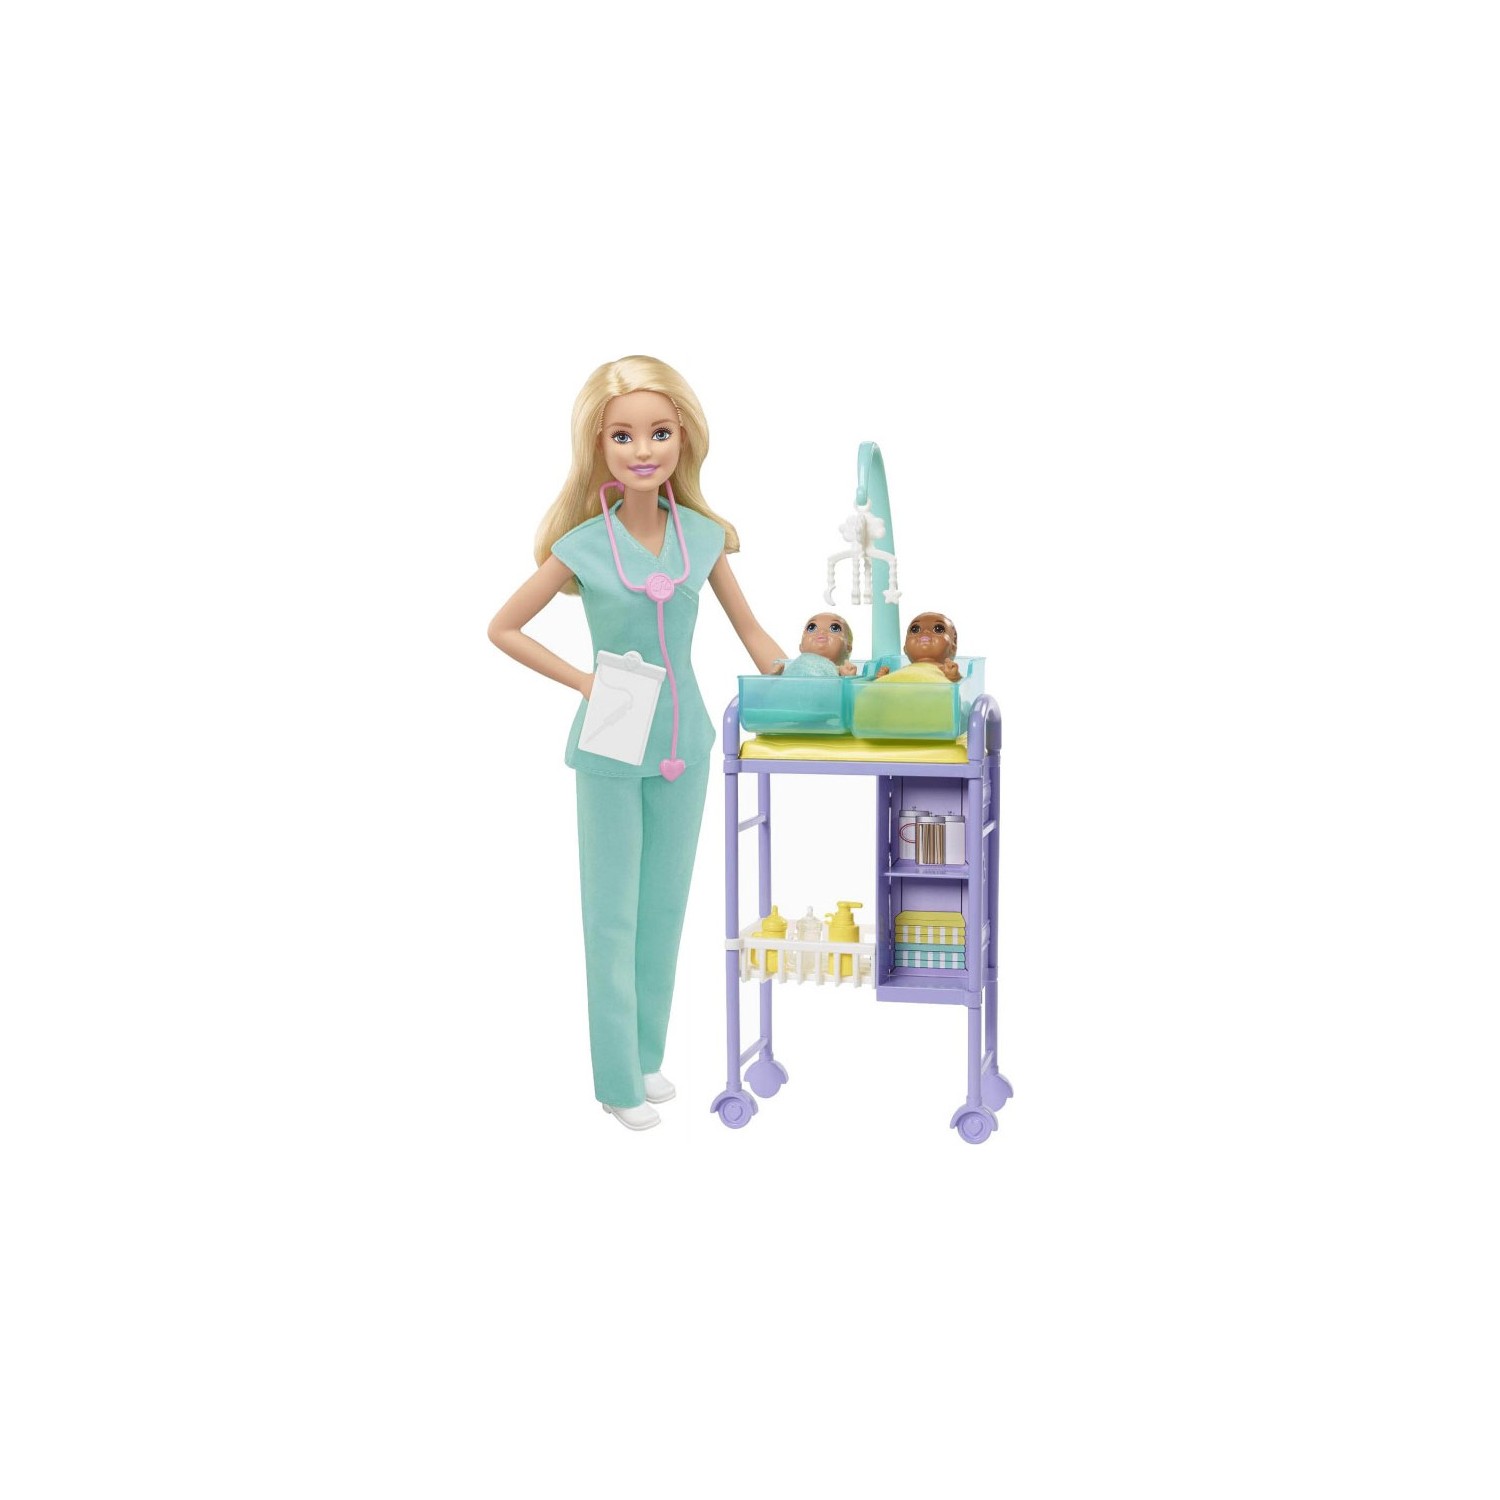 Кукла Barbie акушерка DHB63 GKH23 игровой набор barbie профессии 29 см dhb63 детский врач 4